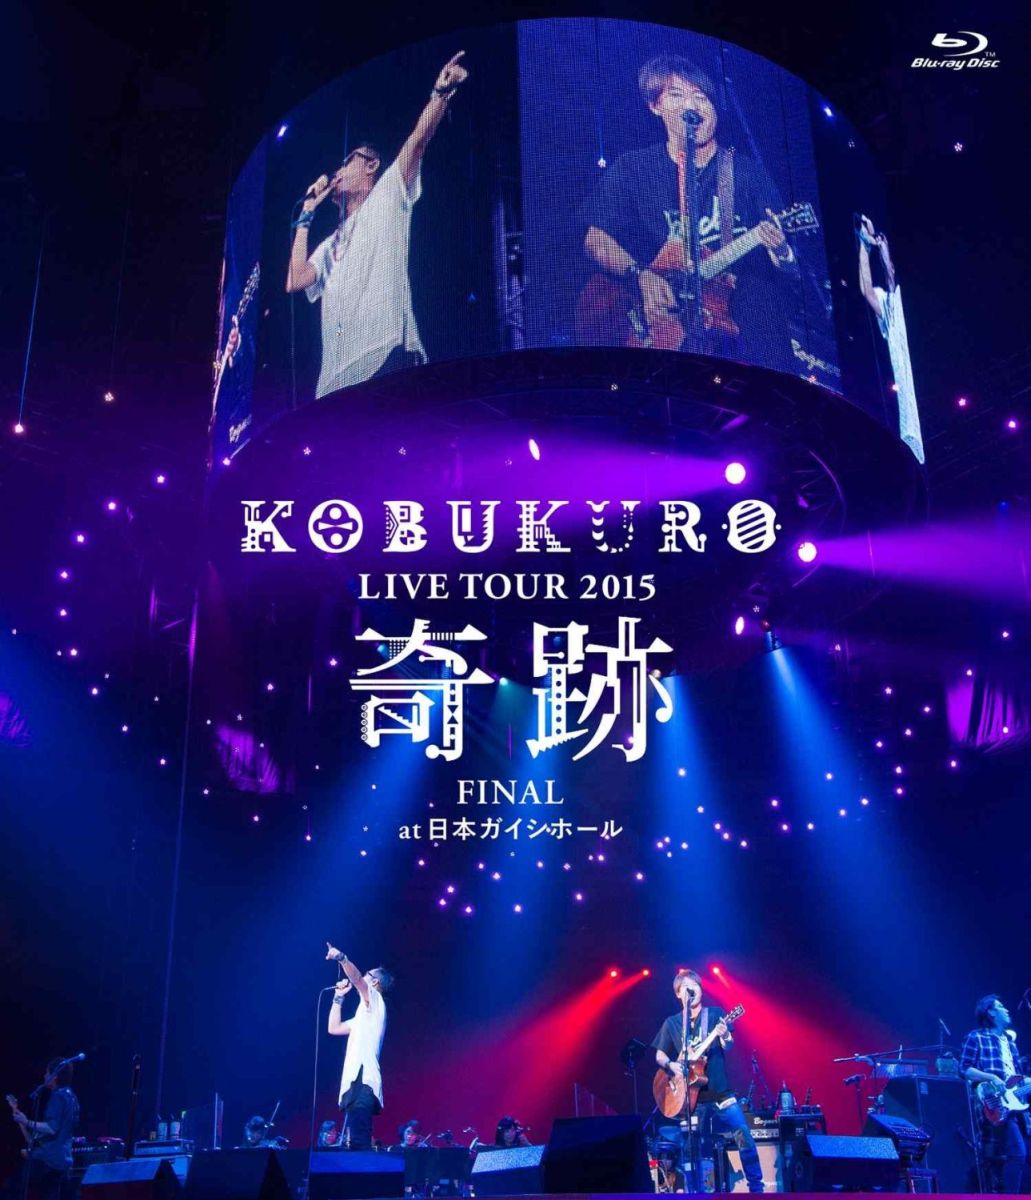 KOBUKURO LIVE TOUR 2015 “奇跡” FINAL at 日本ガイシホール 【初回盤Blu-ray】 [ コブクロ ]